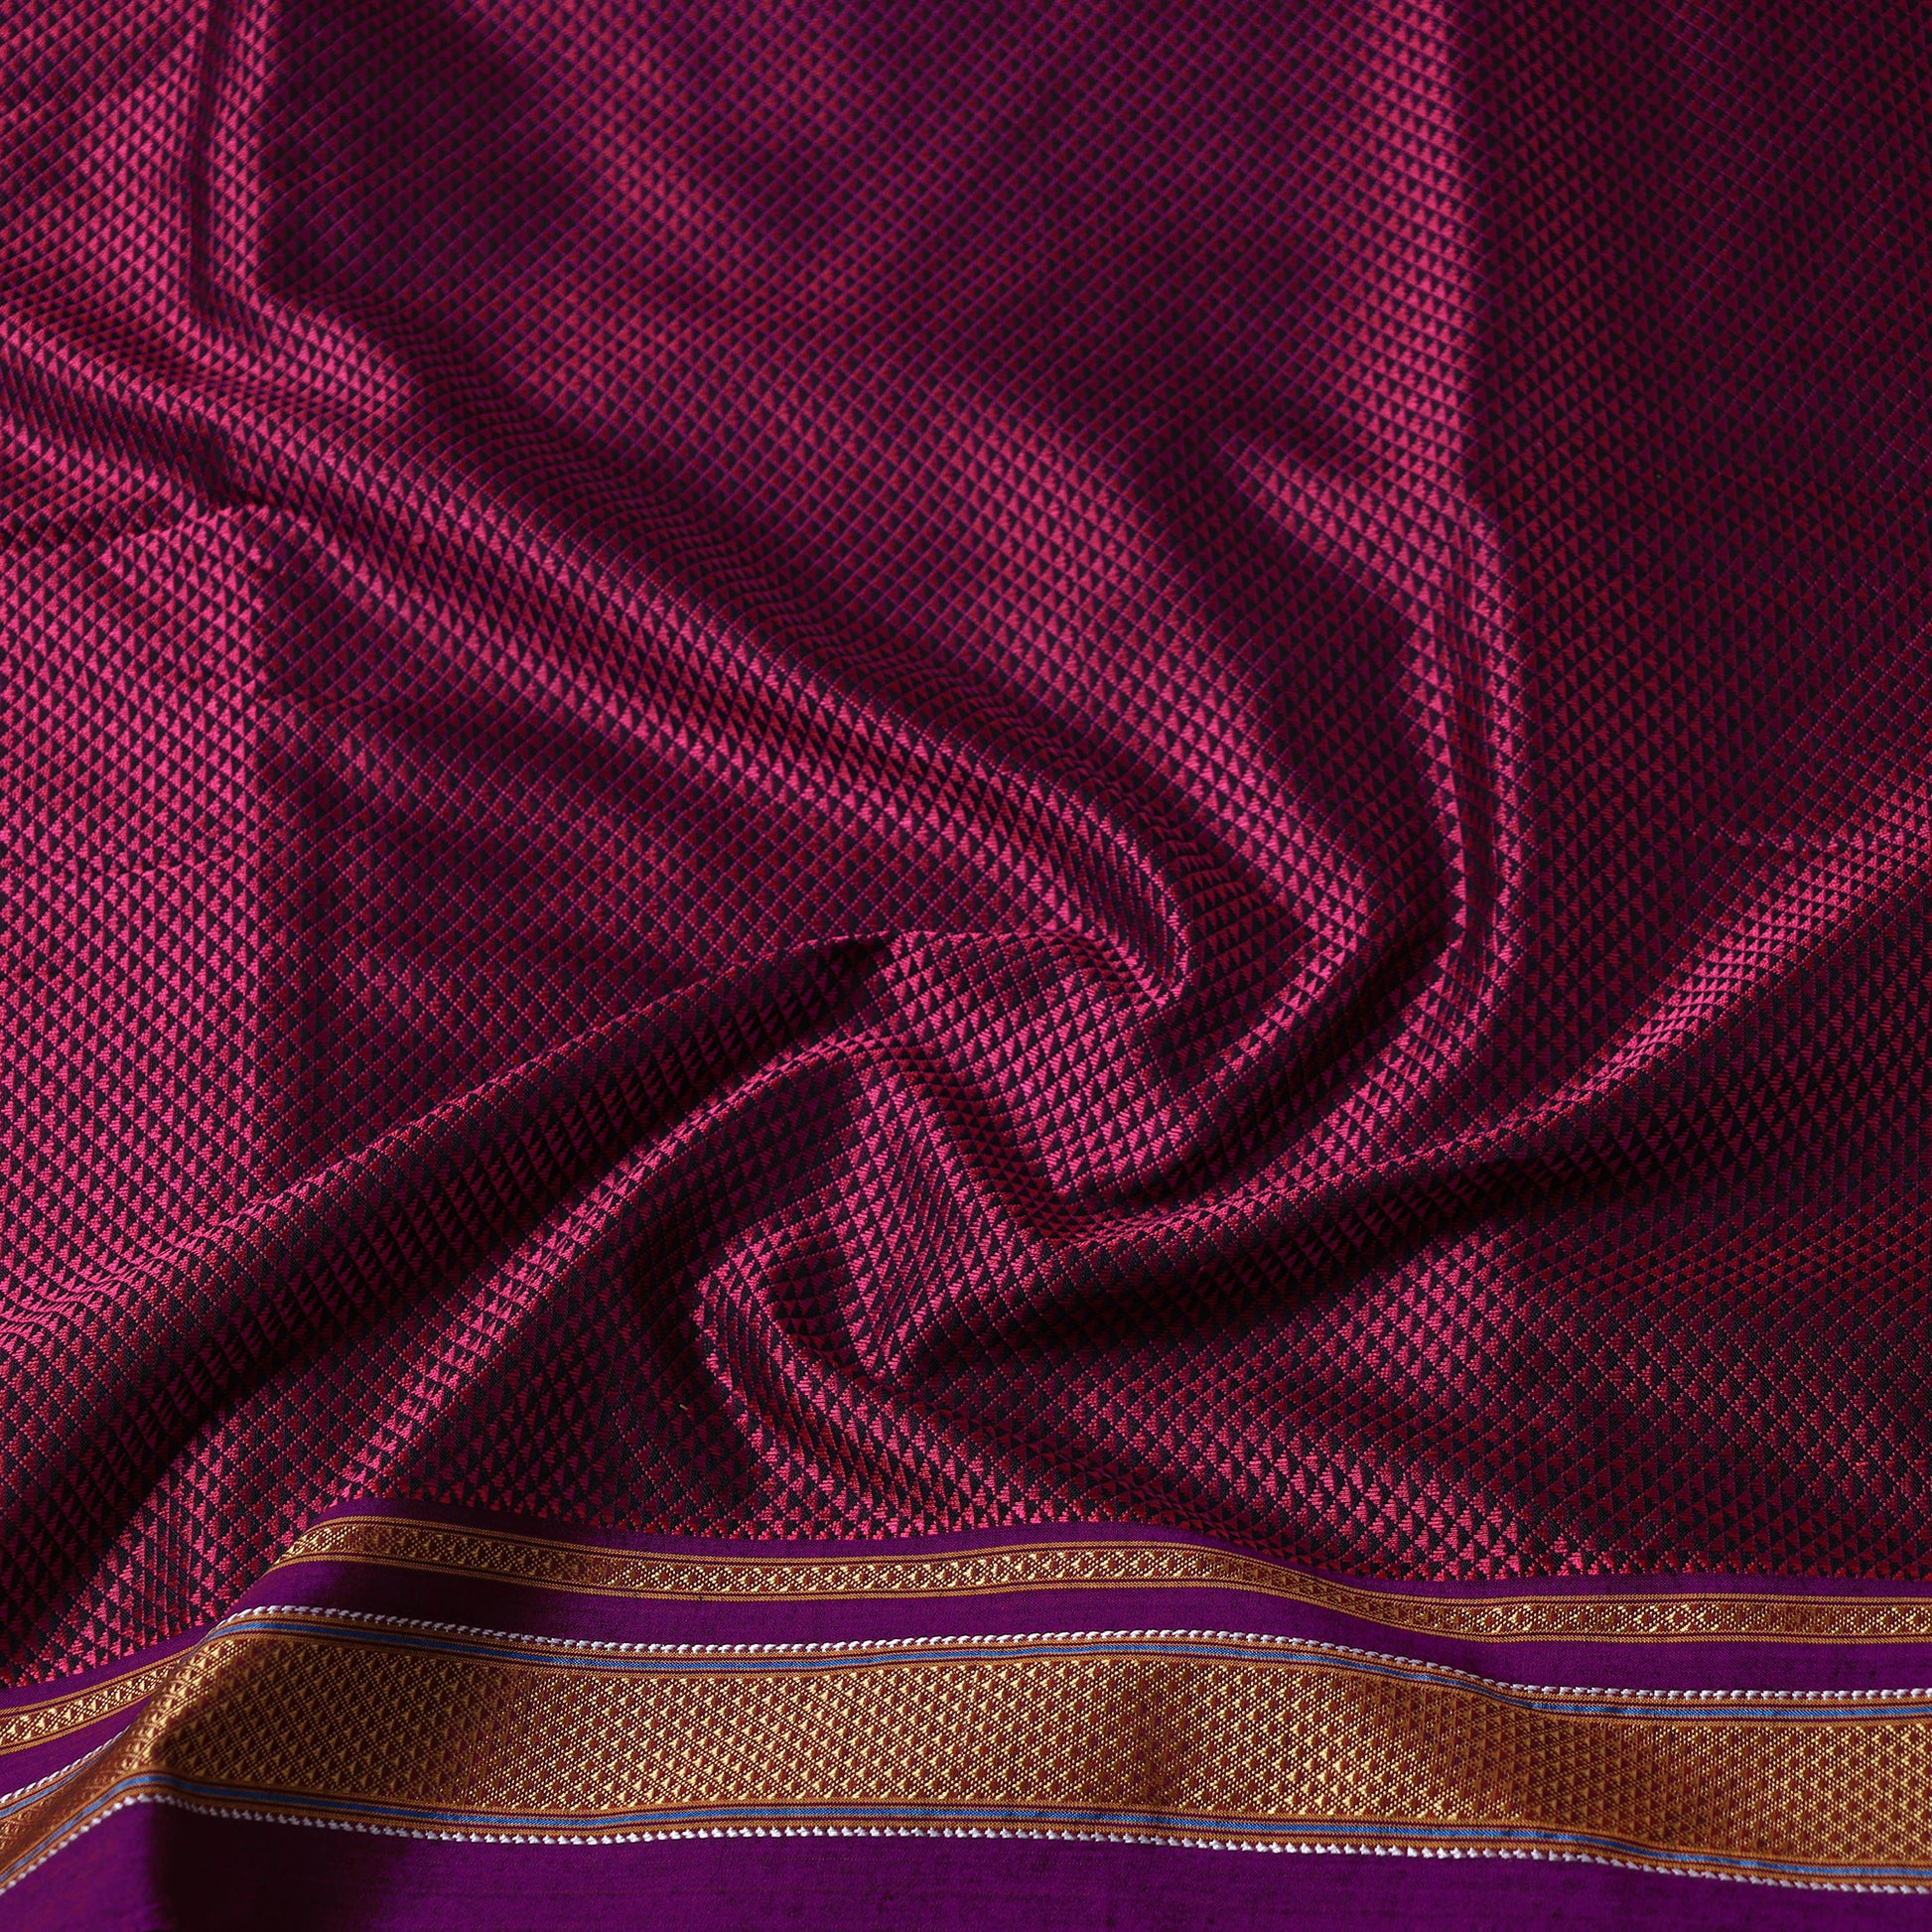 Karnataka Khun Cotton Fabric